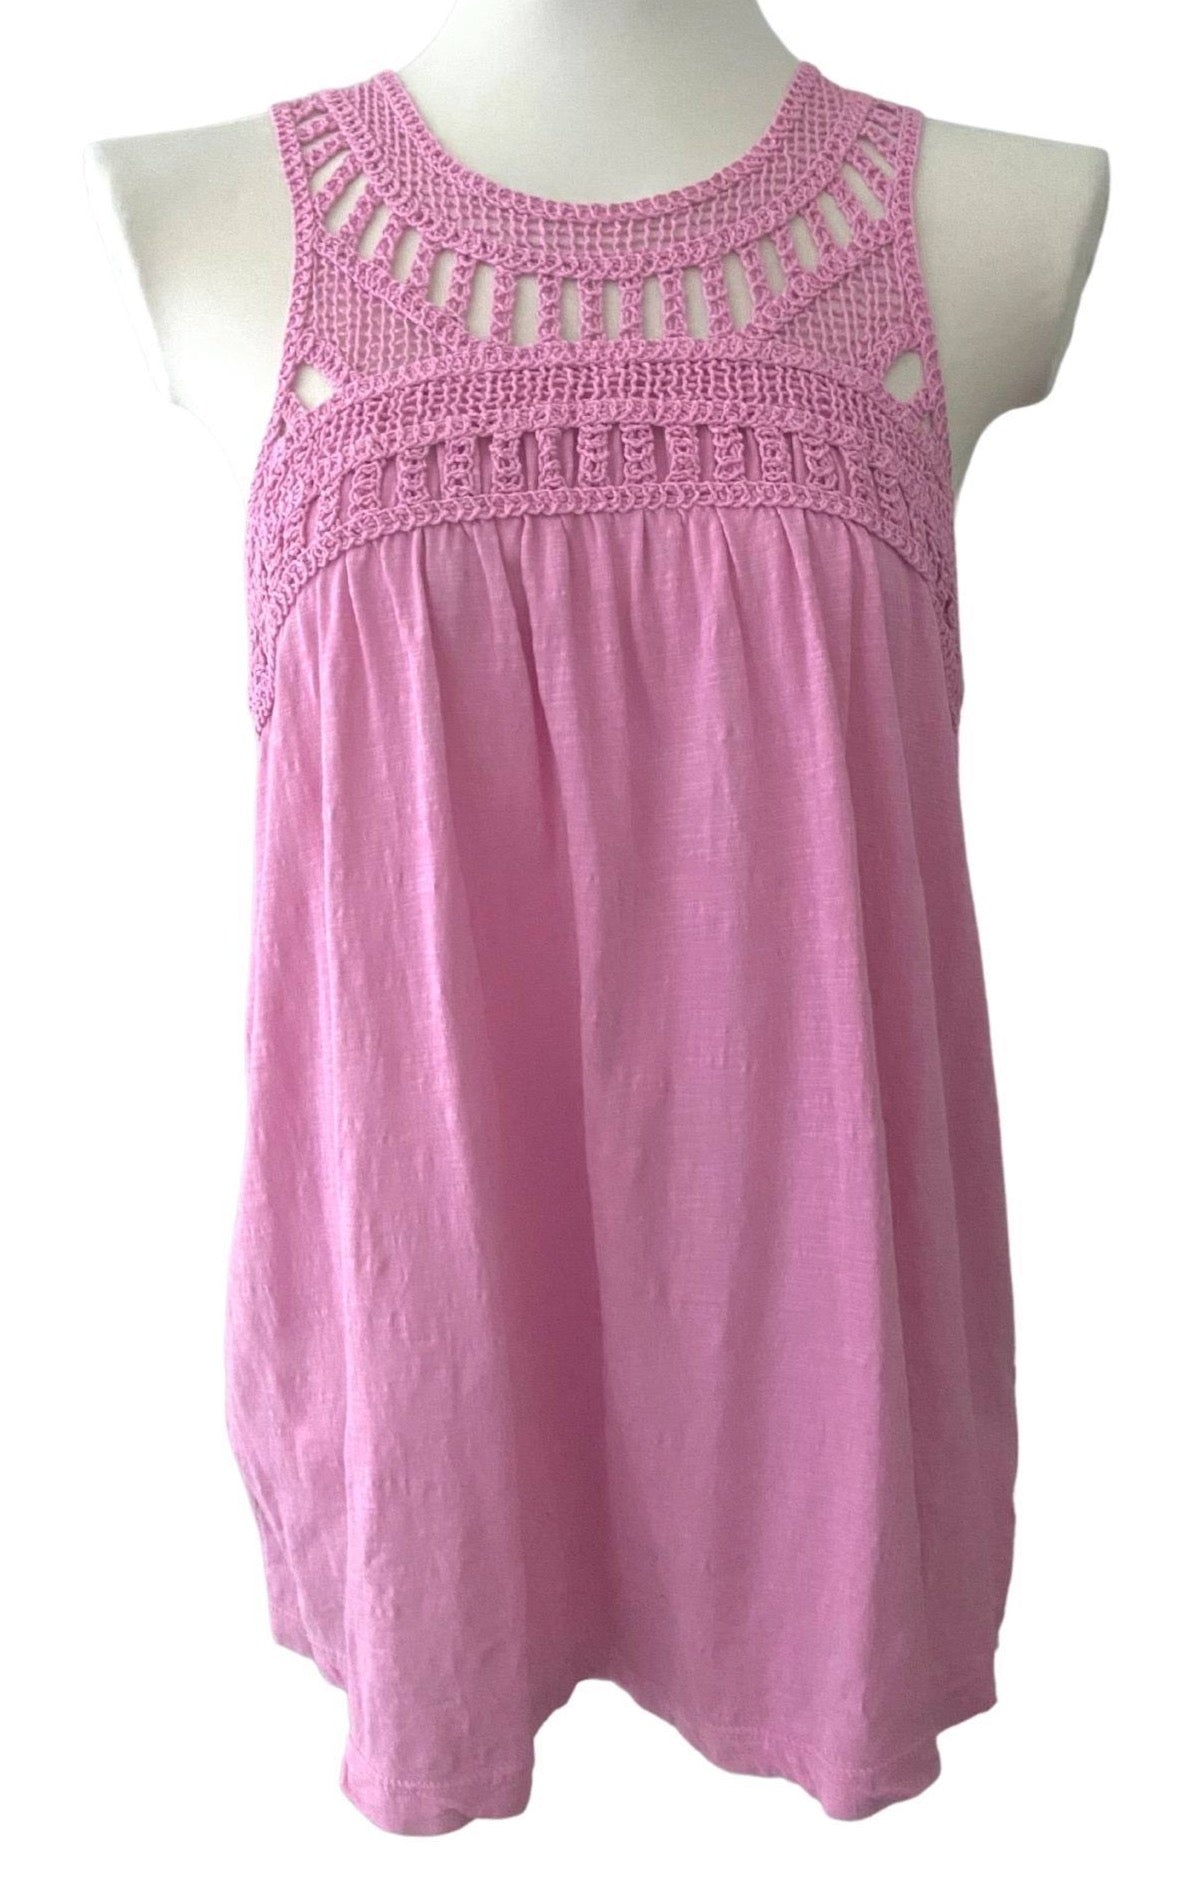 Cool Summer SONOMA pink crochet trim top